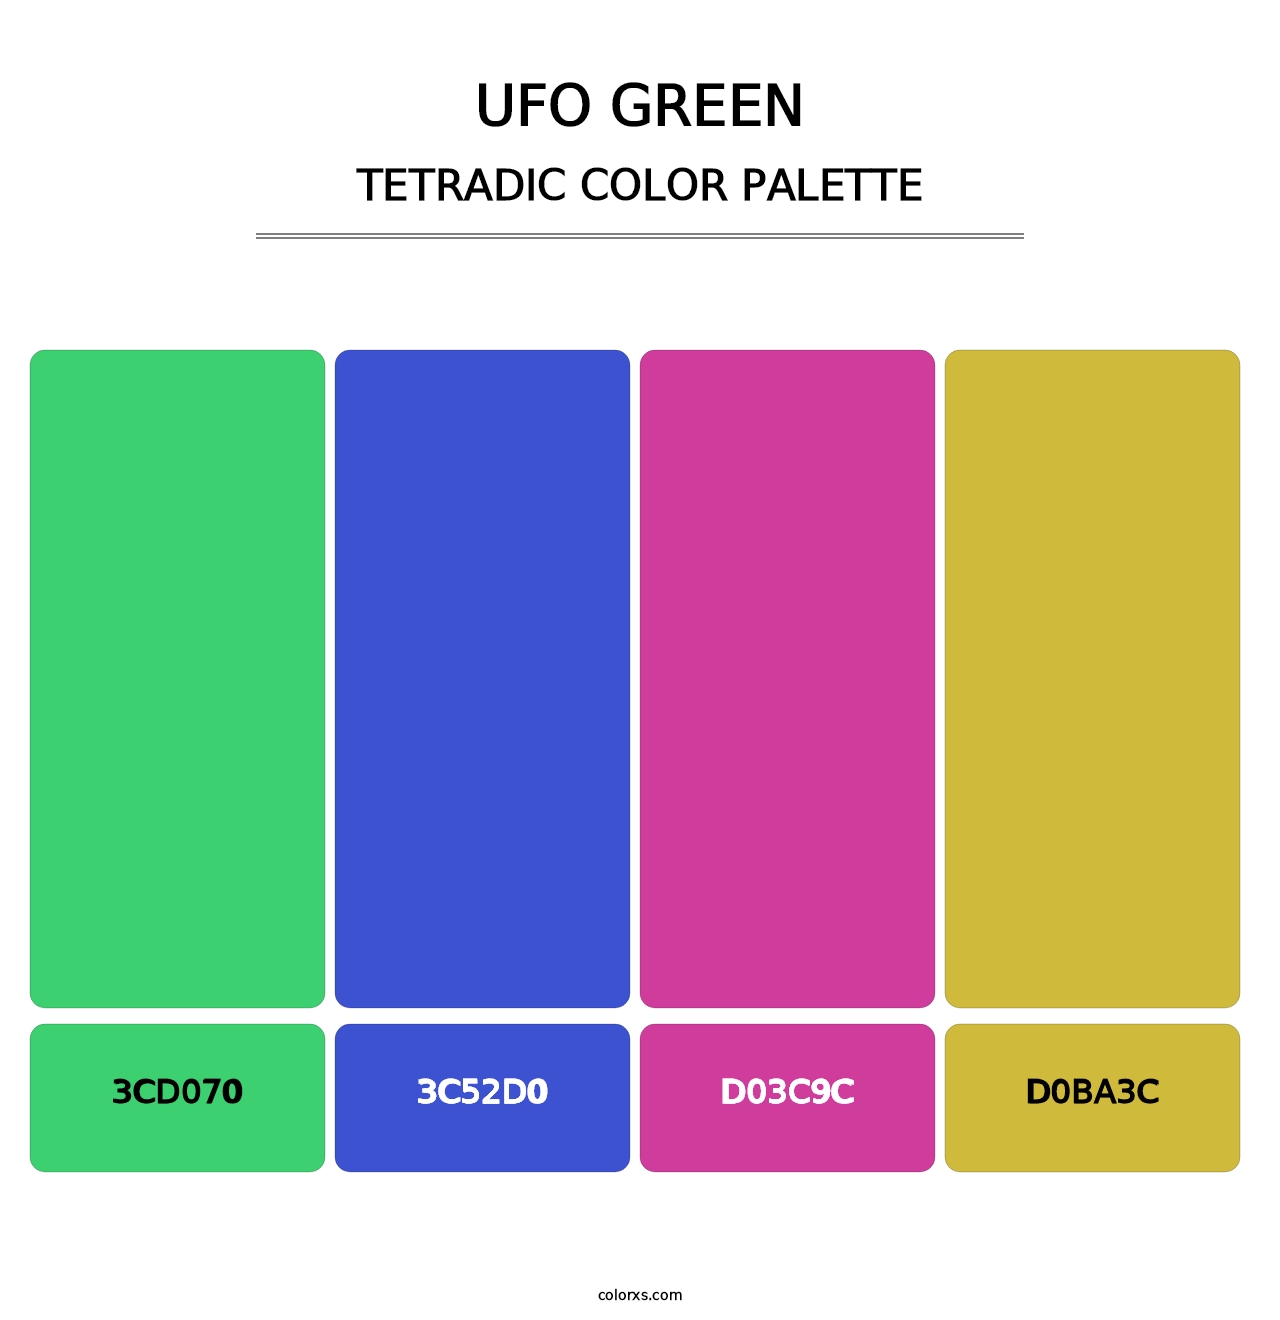 UFO Green - Tetradic Color Palette